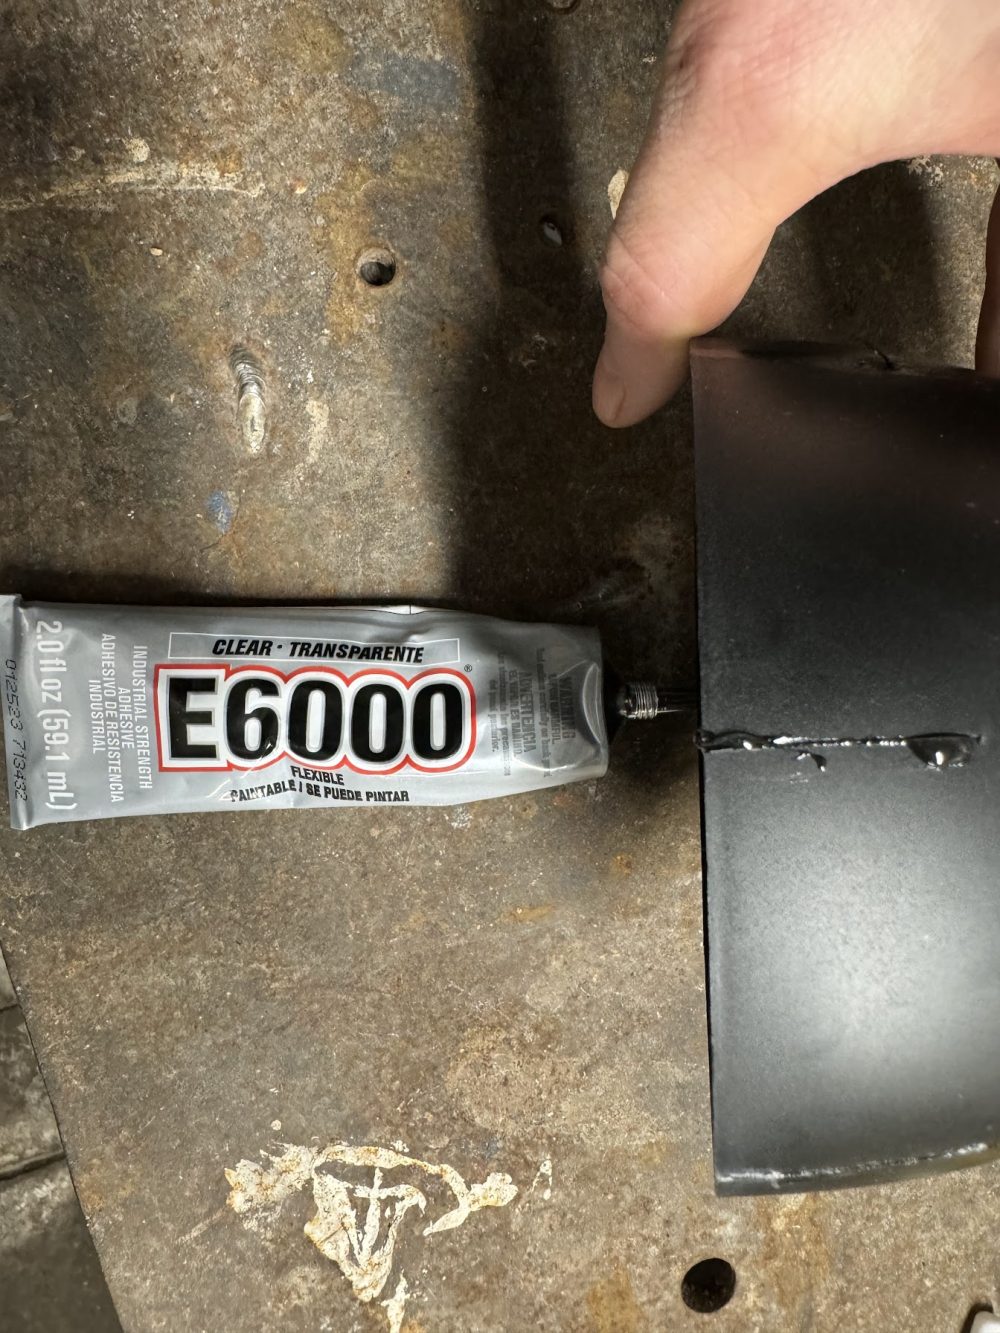 E6000 glue plastic test